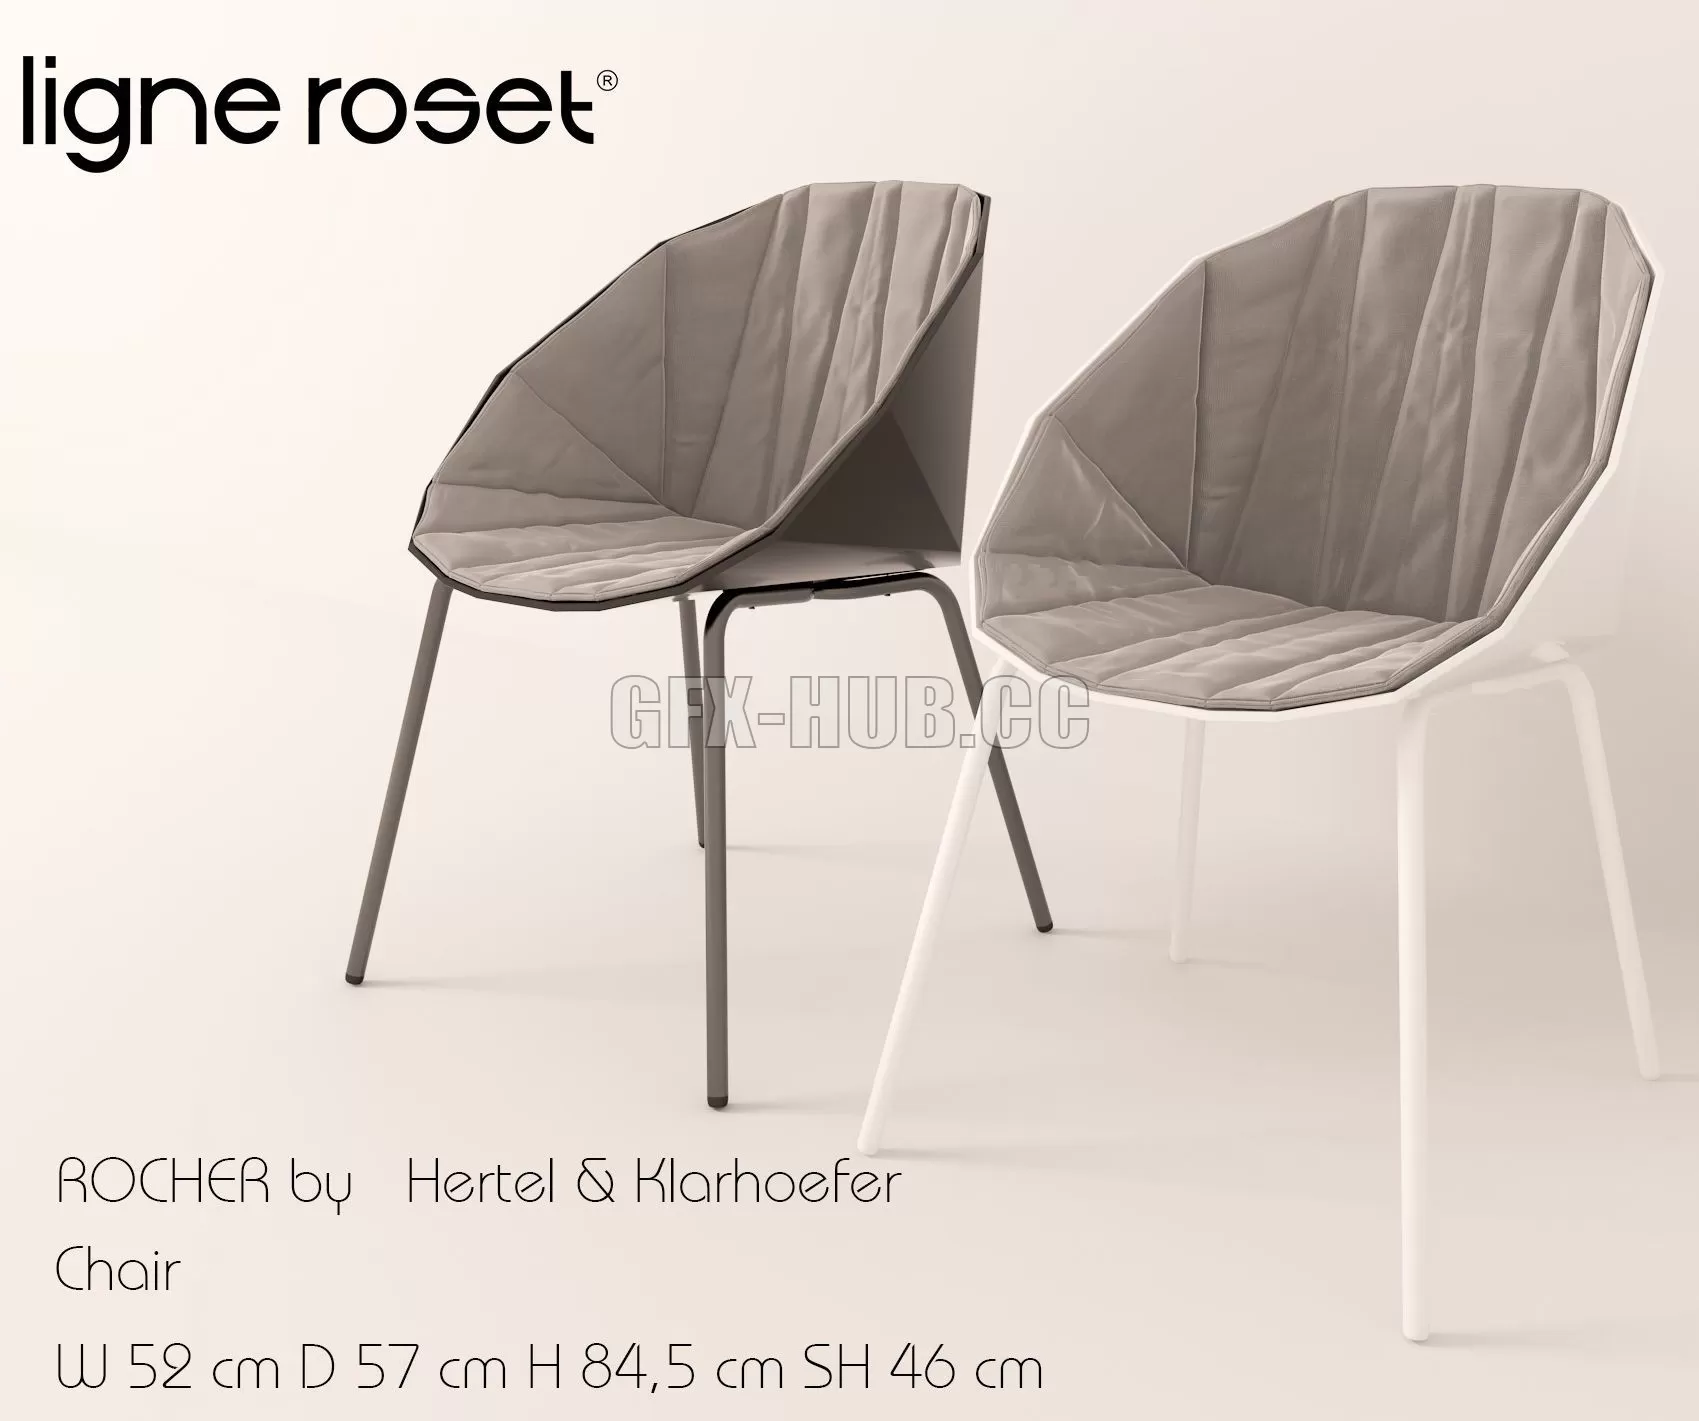 CHAIR – Rocher chair by Ligne Roset